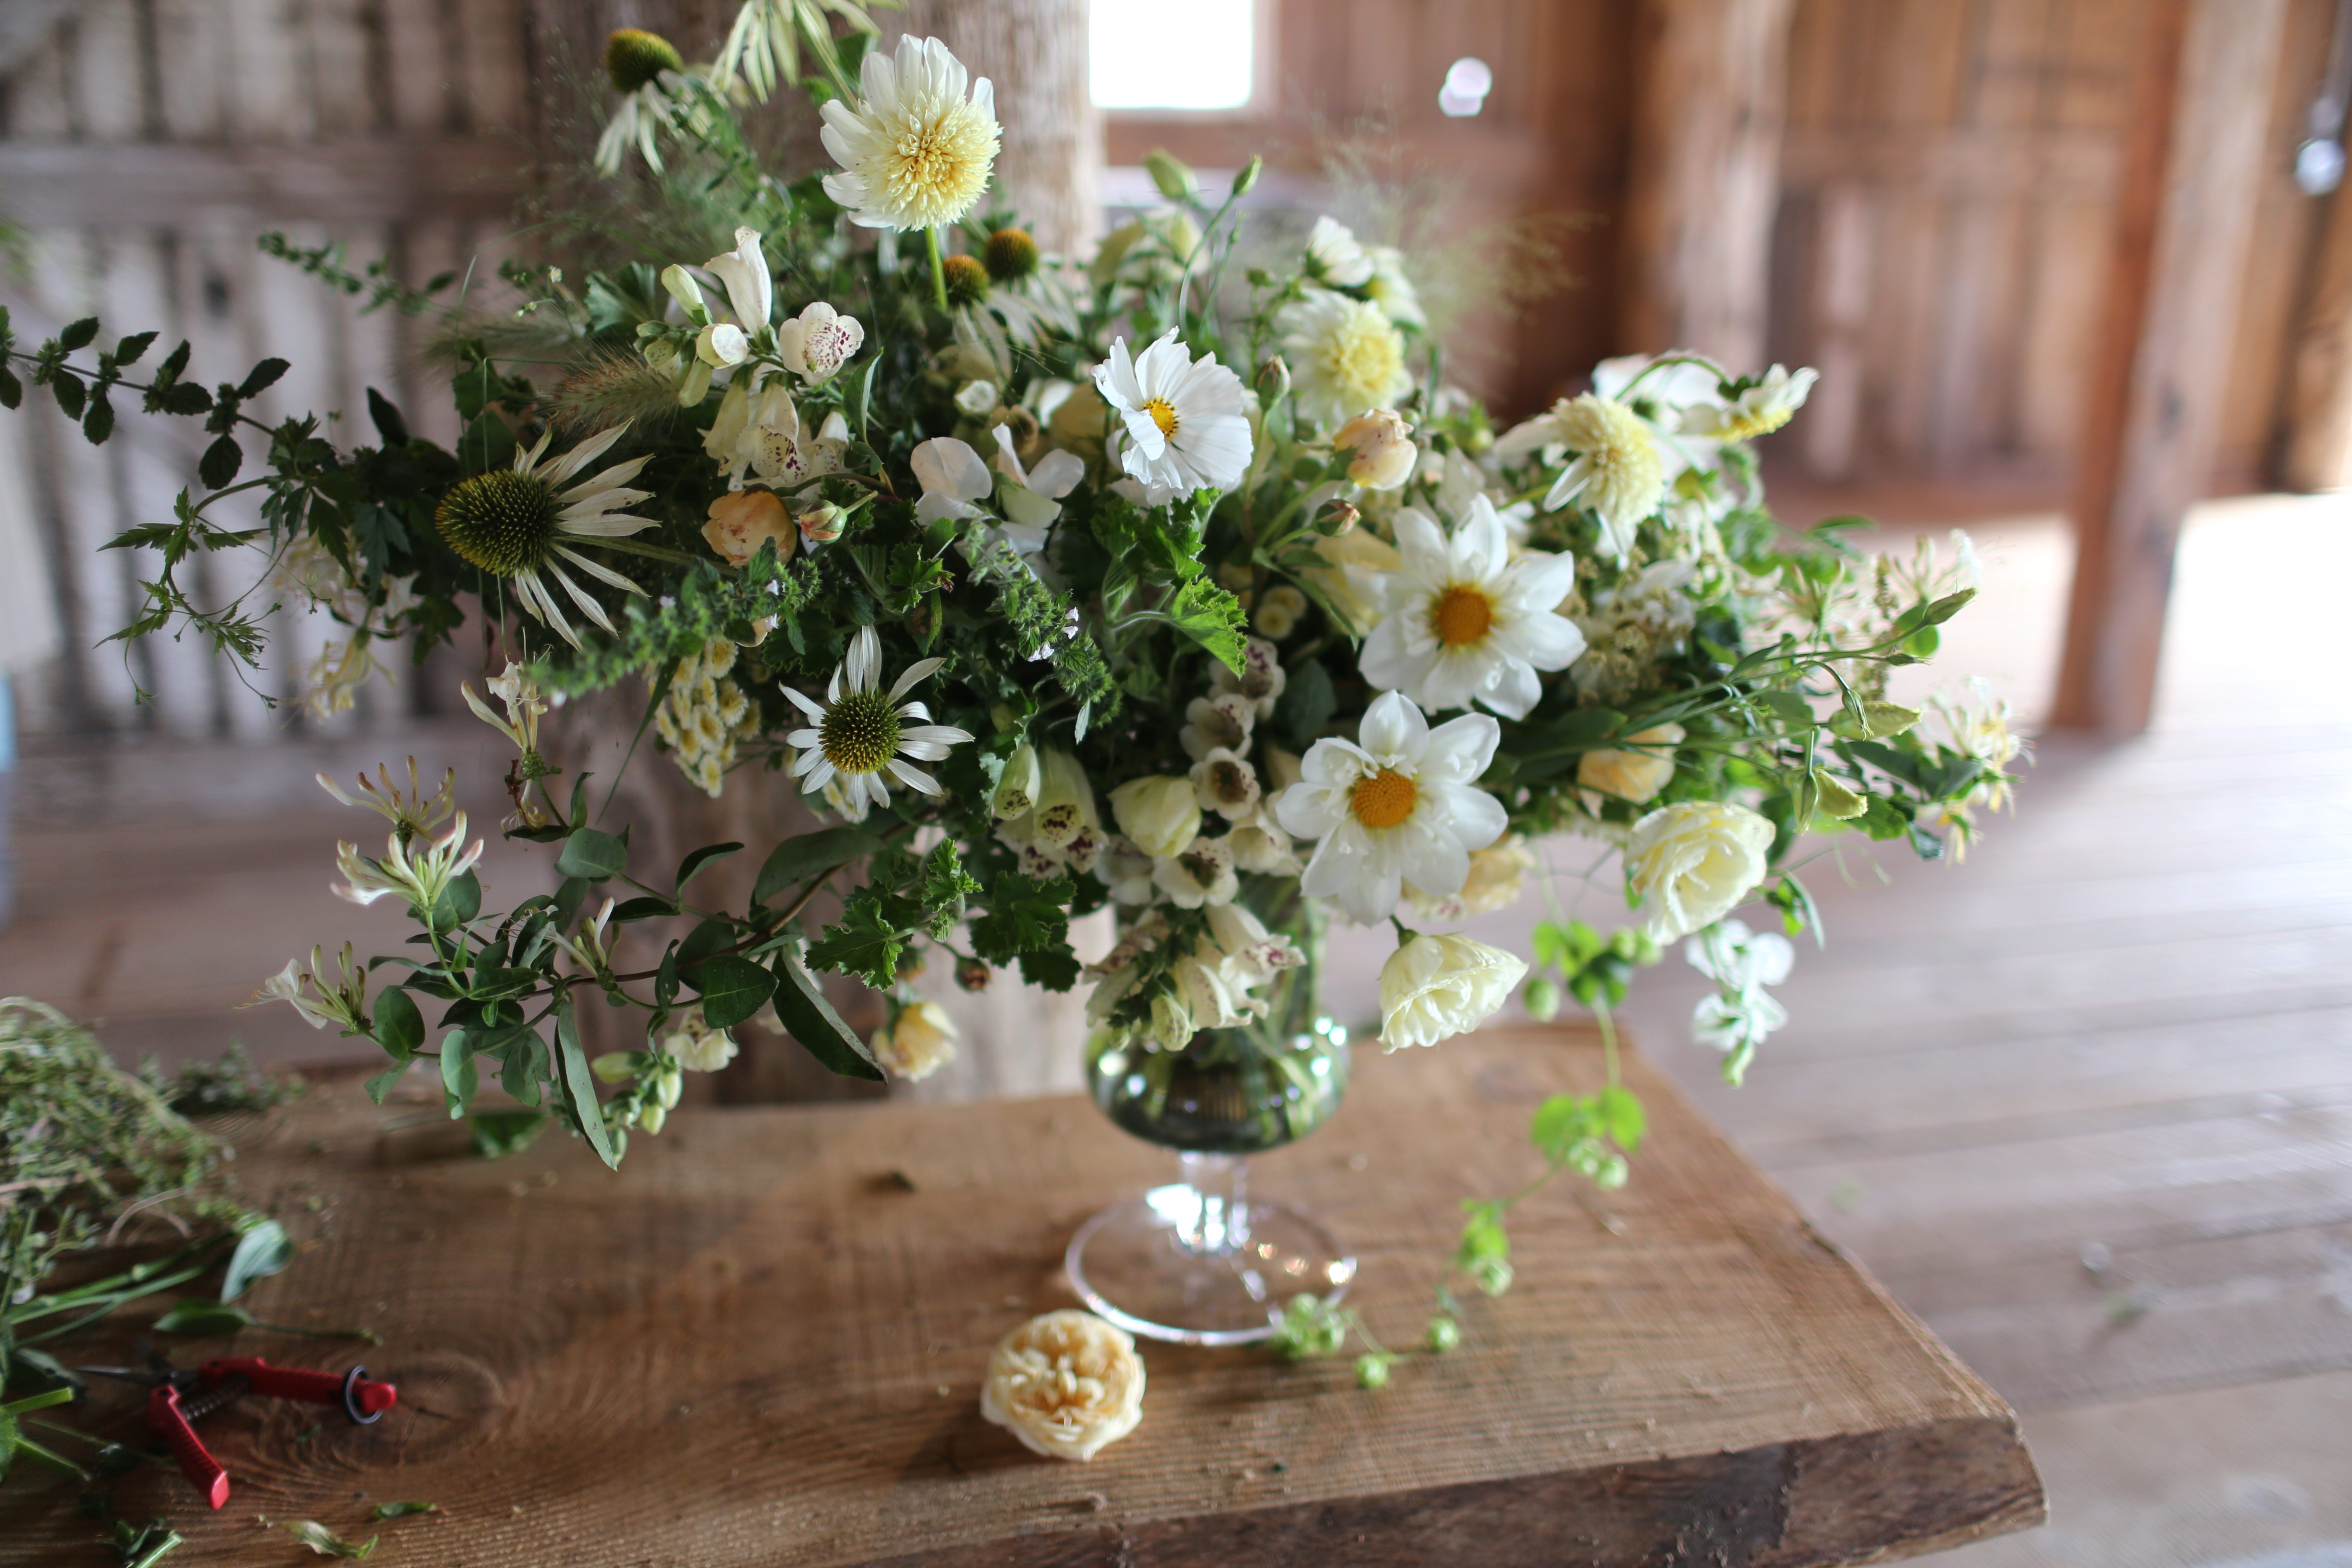 A flower arrangement on a table